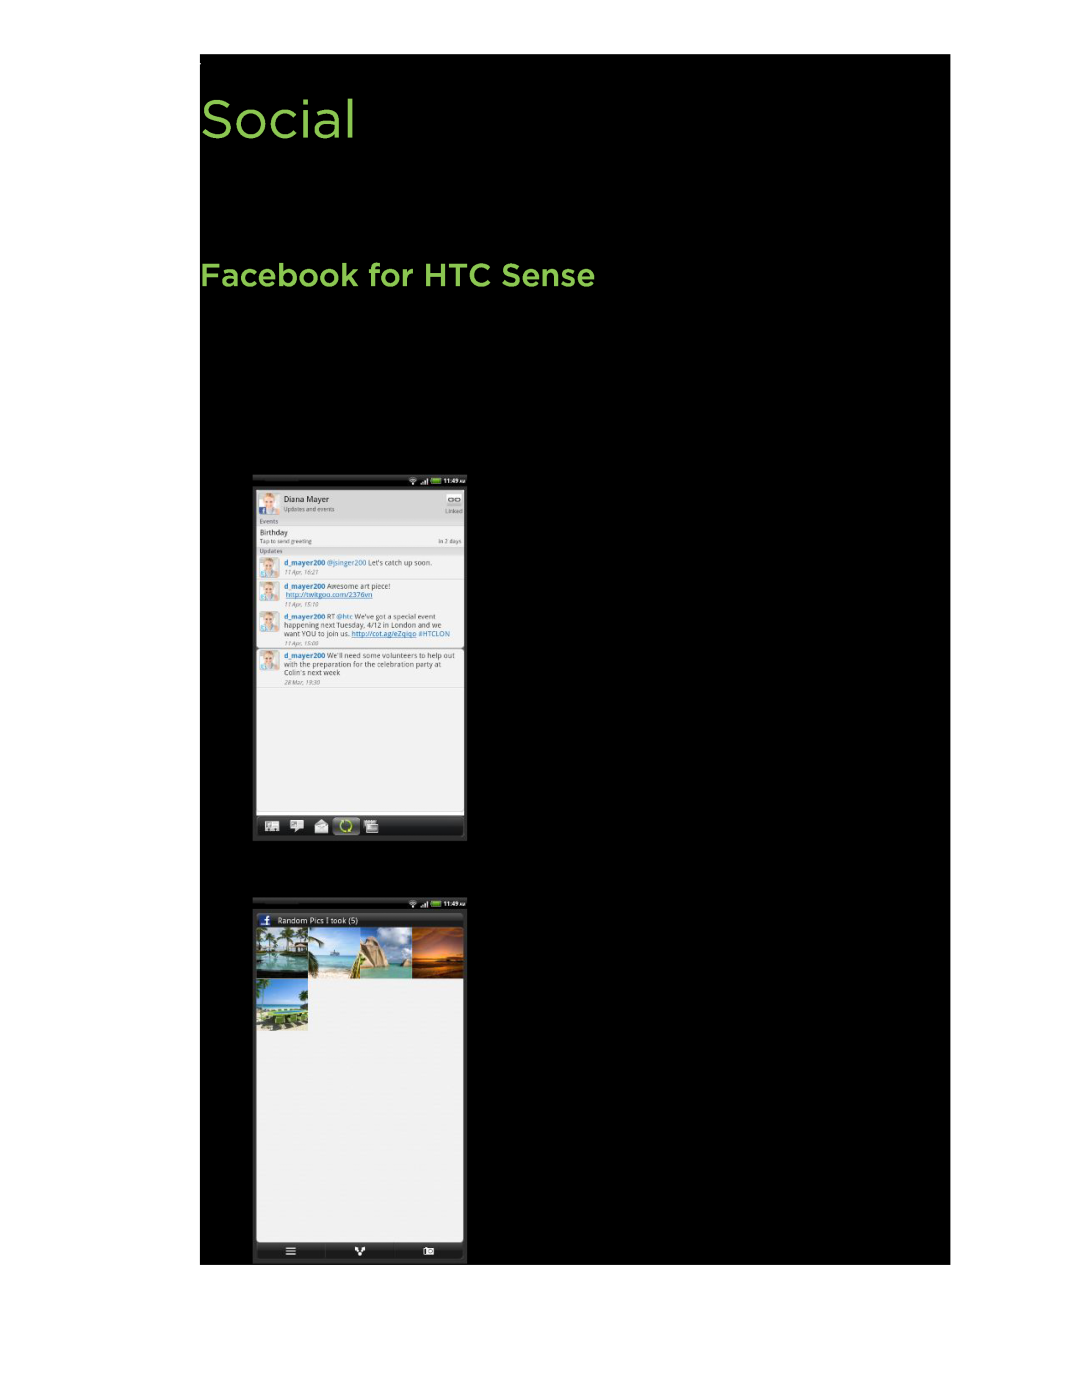 HTC HTCFlyerP512 manual Social, Facebook for HTC Sense 